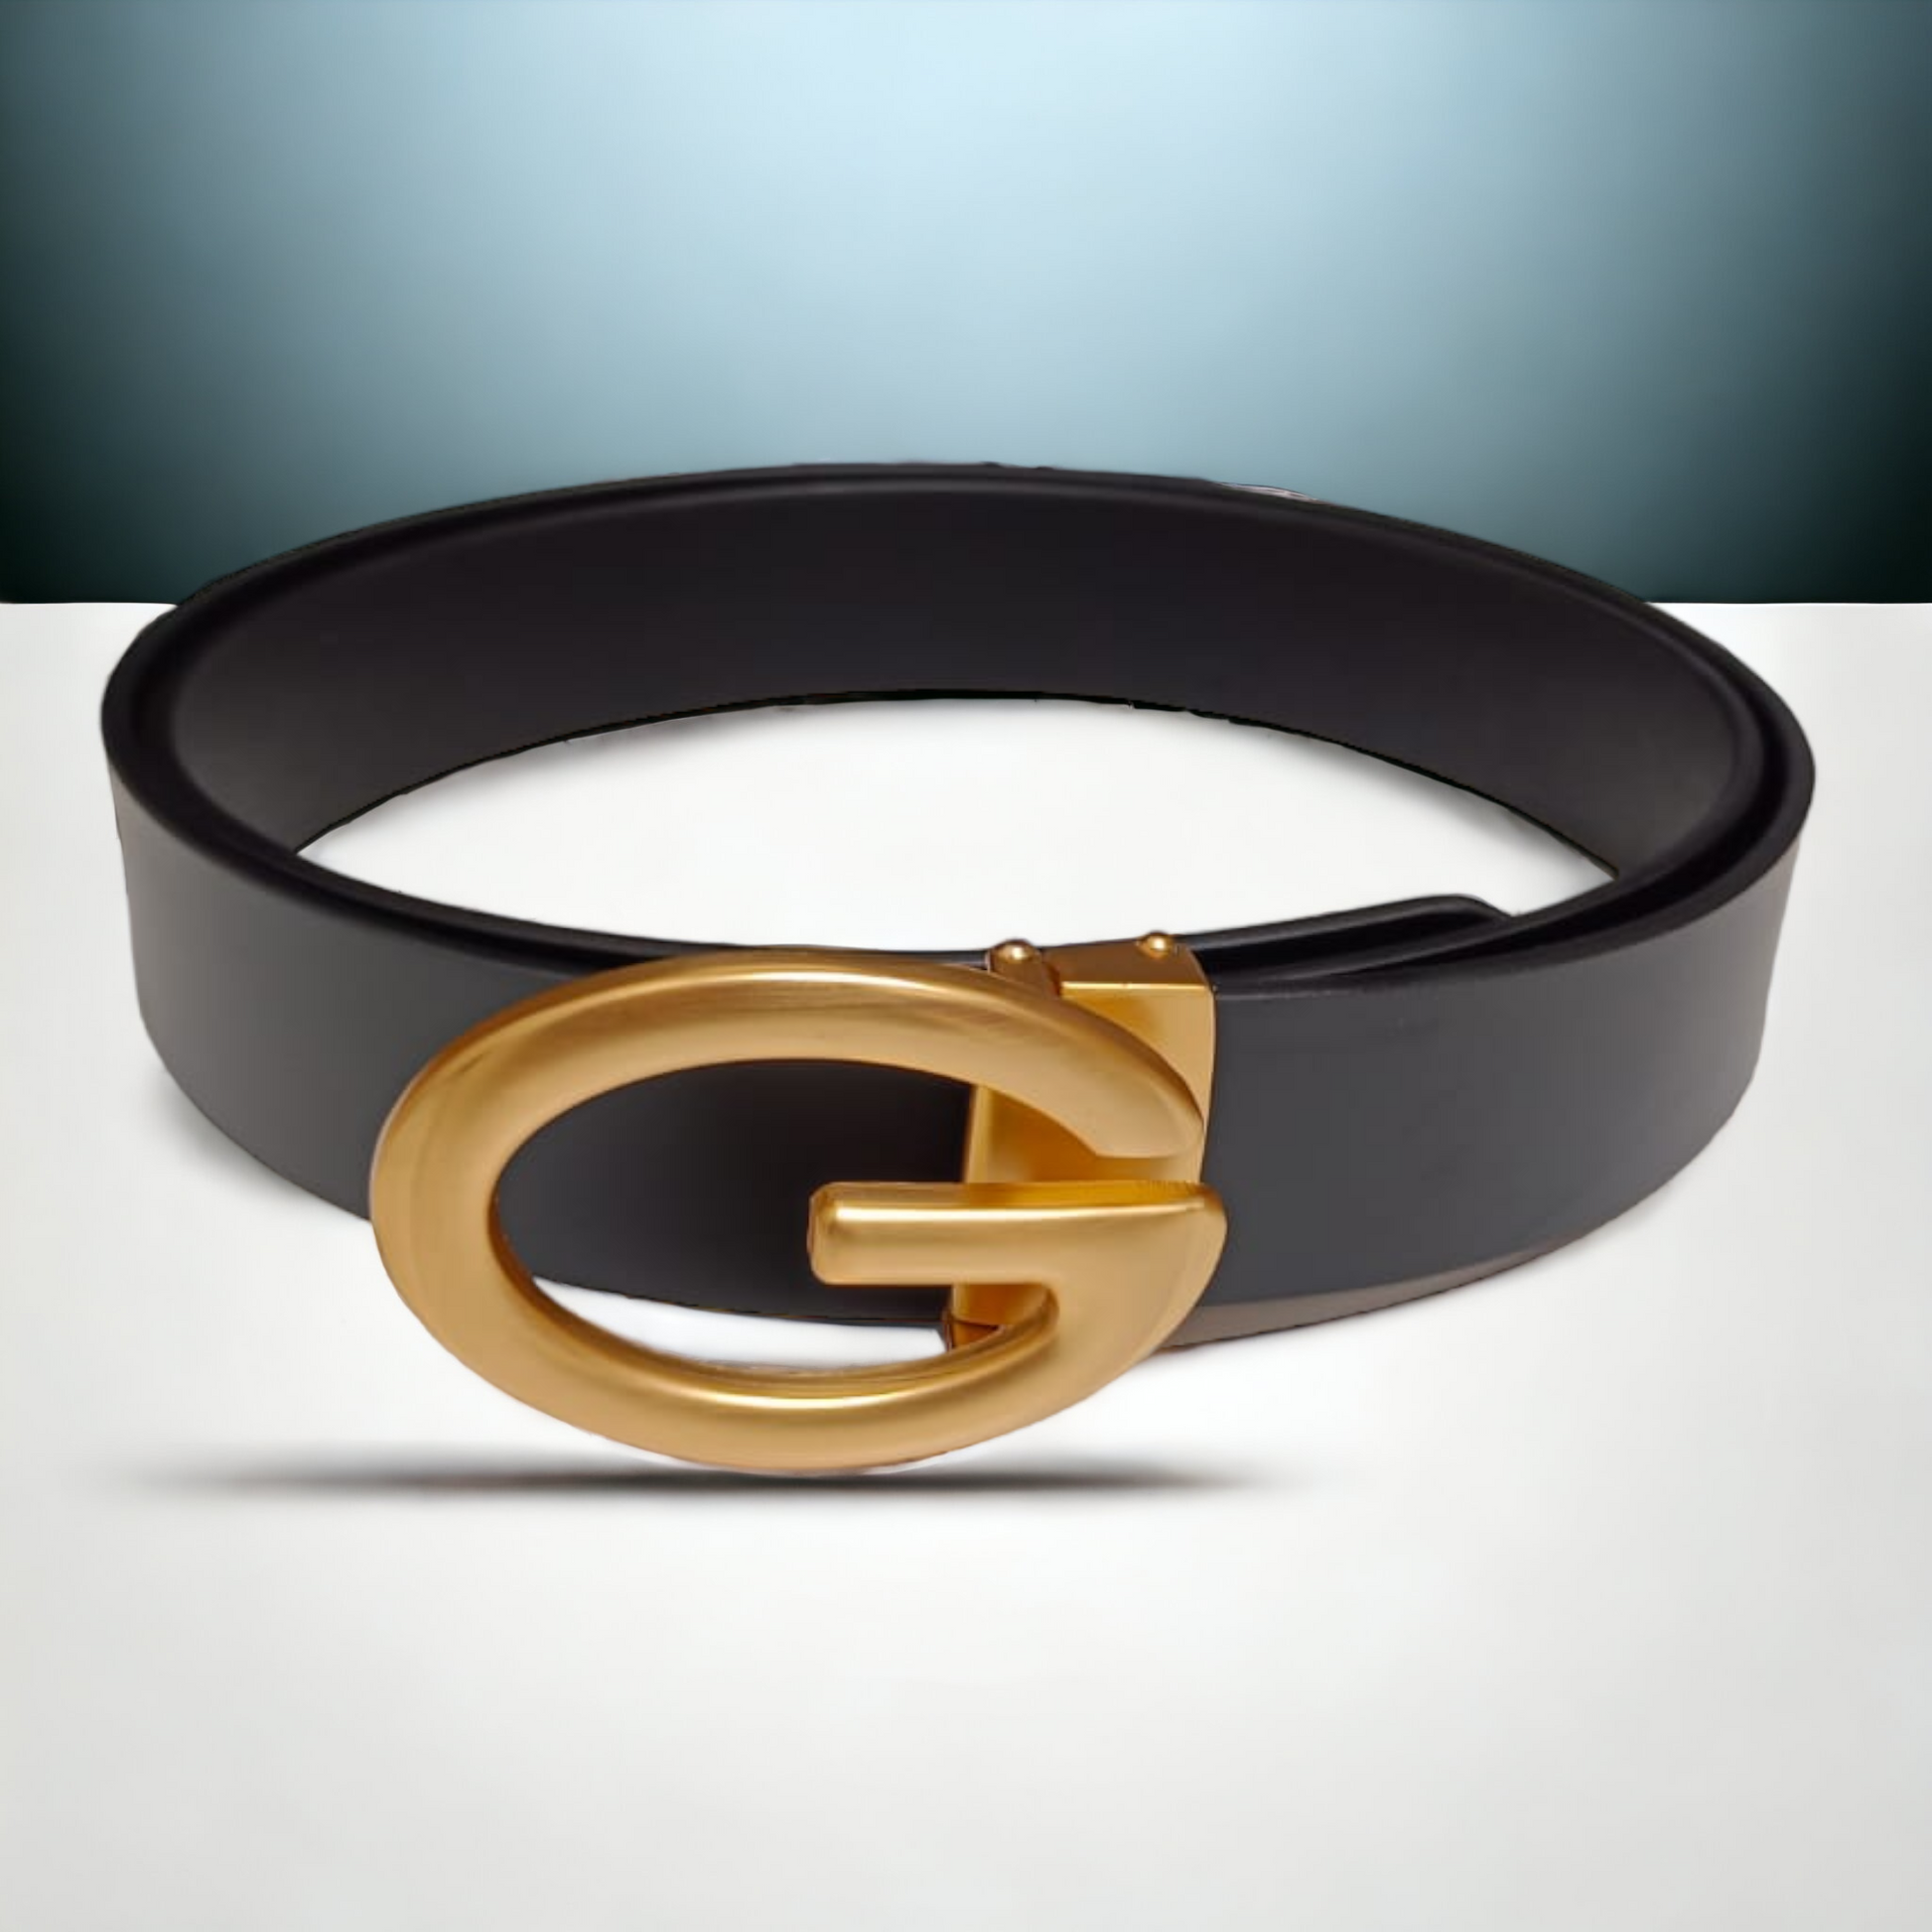 Jack Marc Men's Belt Needle Buckle Black Gold Size (28-40)35mm Belt - JACKMARC.COM